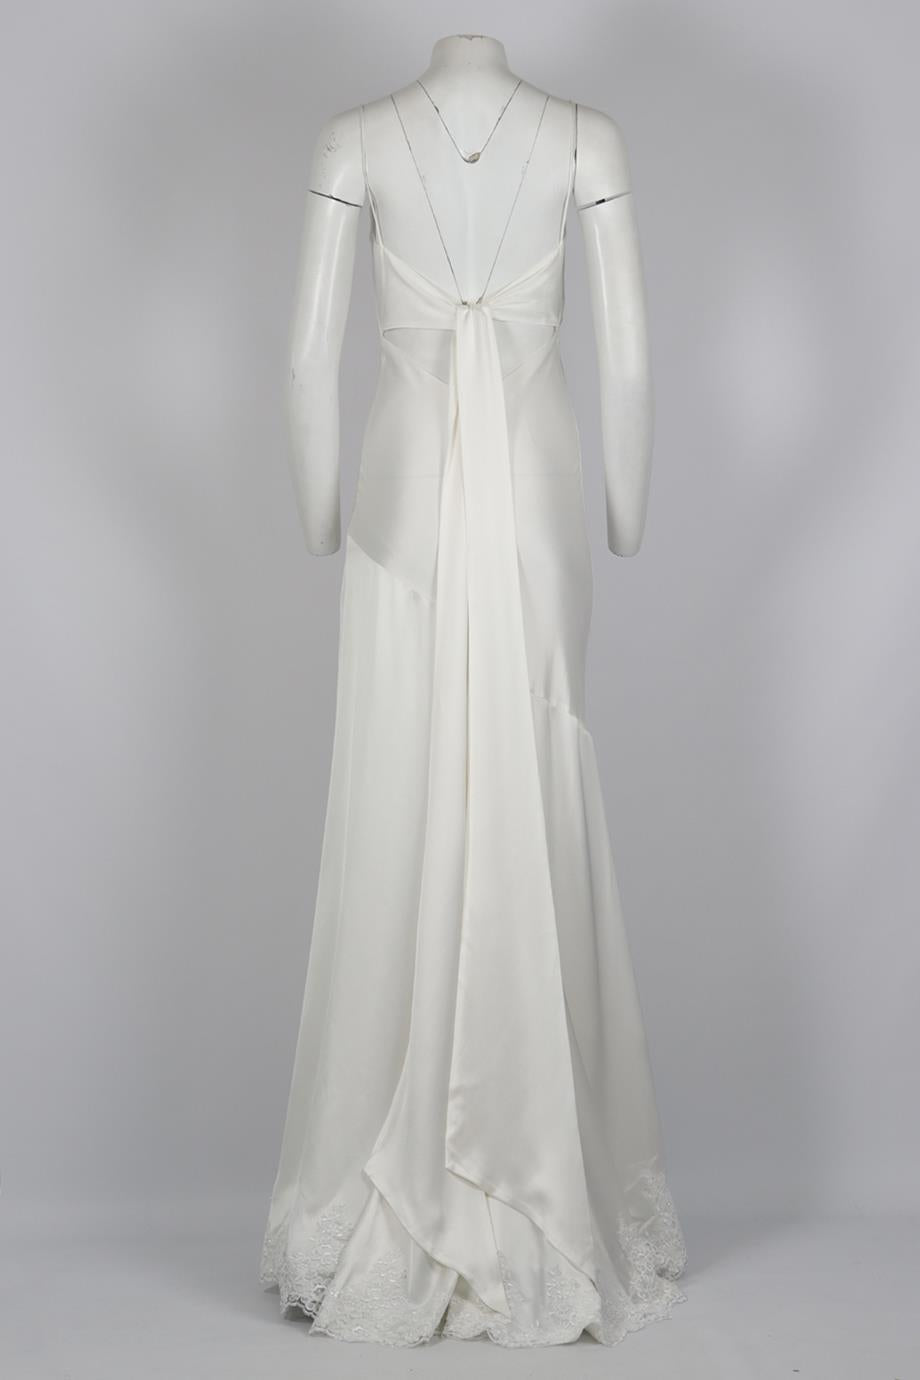 UNBRANDED CUSTOM DRAPED SATIN WEDDING DRESS SMALL